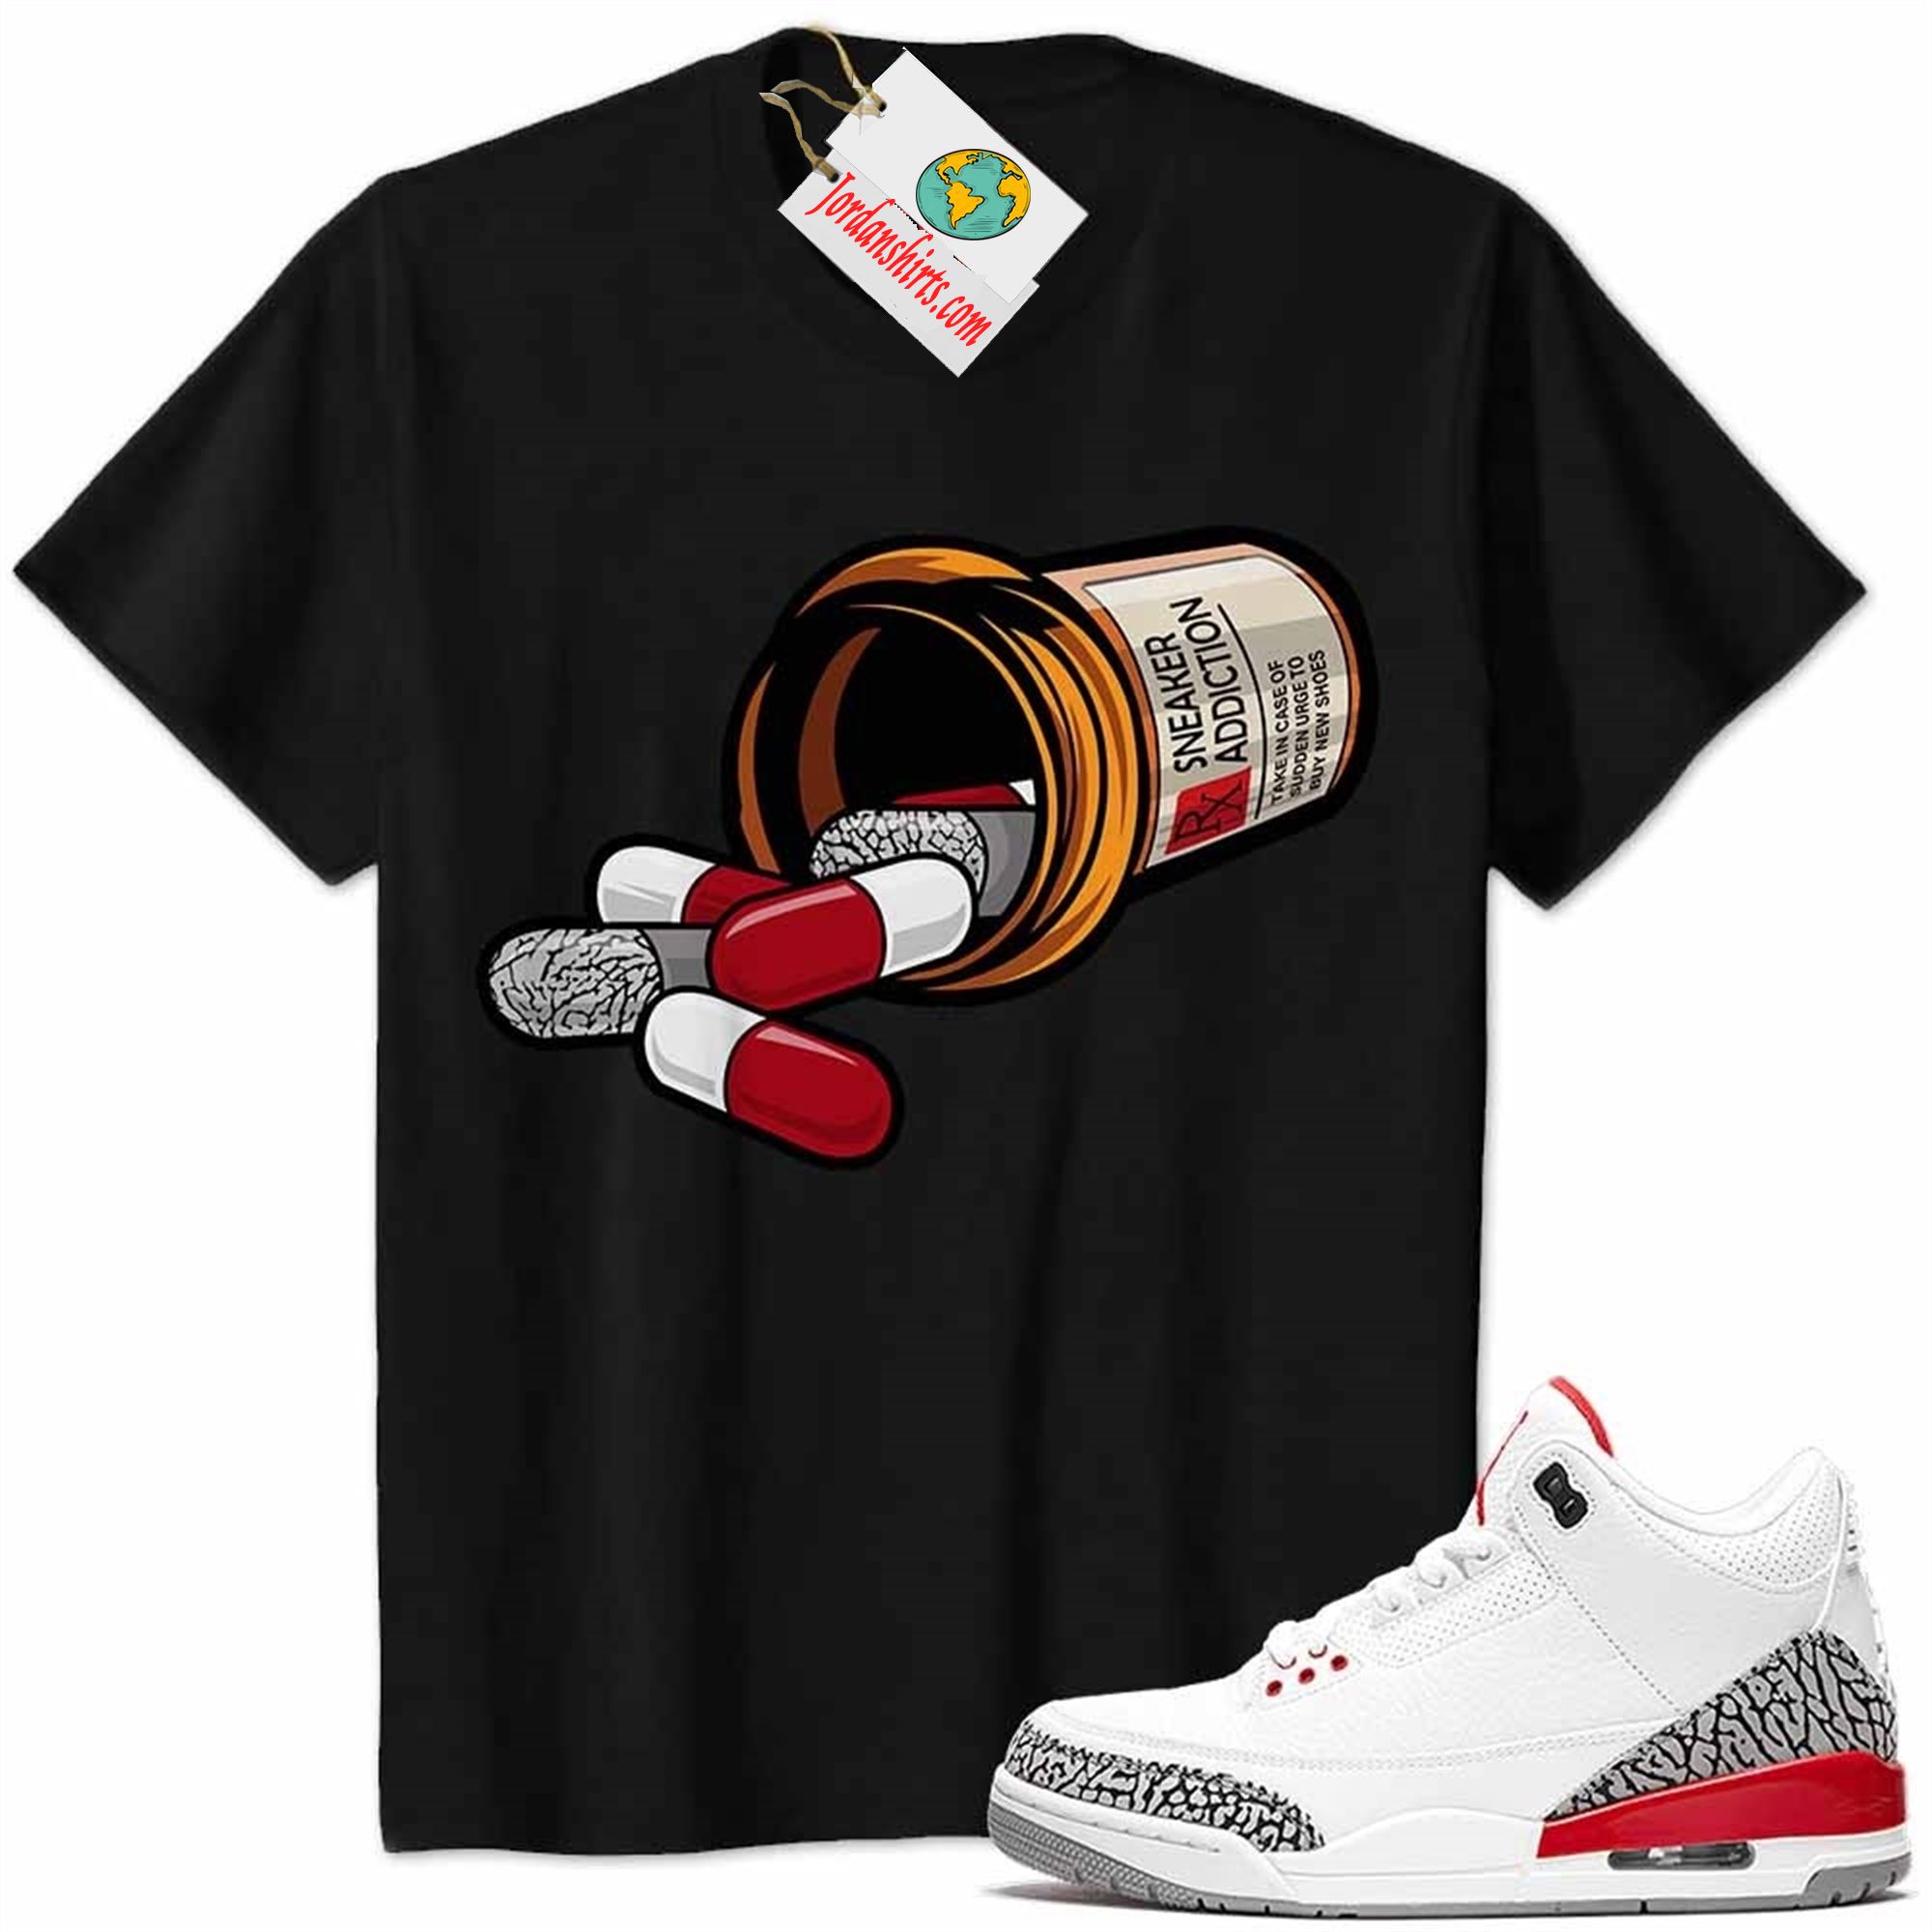 Jordan 3 Shirt, Rx Drugs Pill Bottle Sneaker Addiction Black Air Jordan 3 Katrina 3s Plus Size Up To 5xl